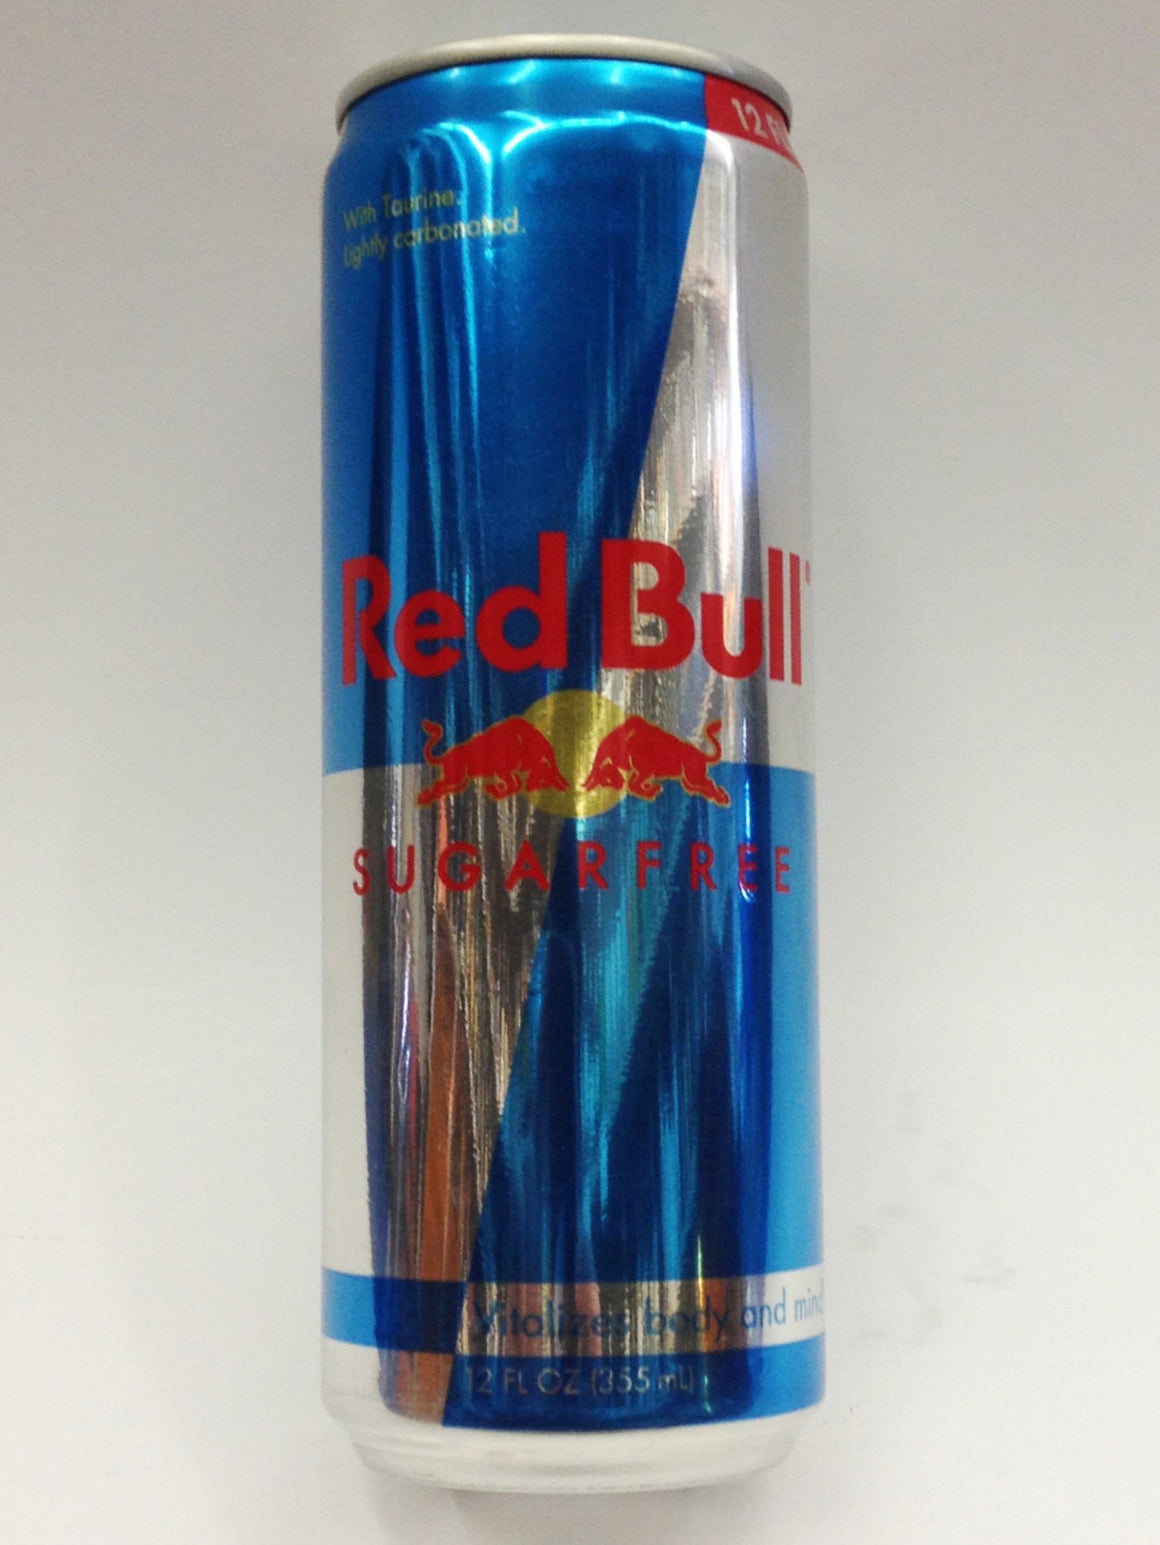 Red Bull Sugarfree Energy Drink 12oz